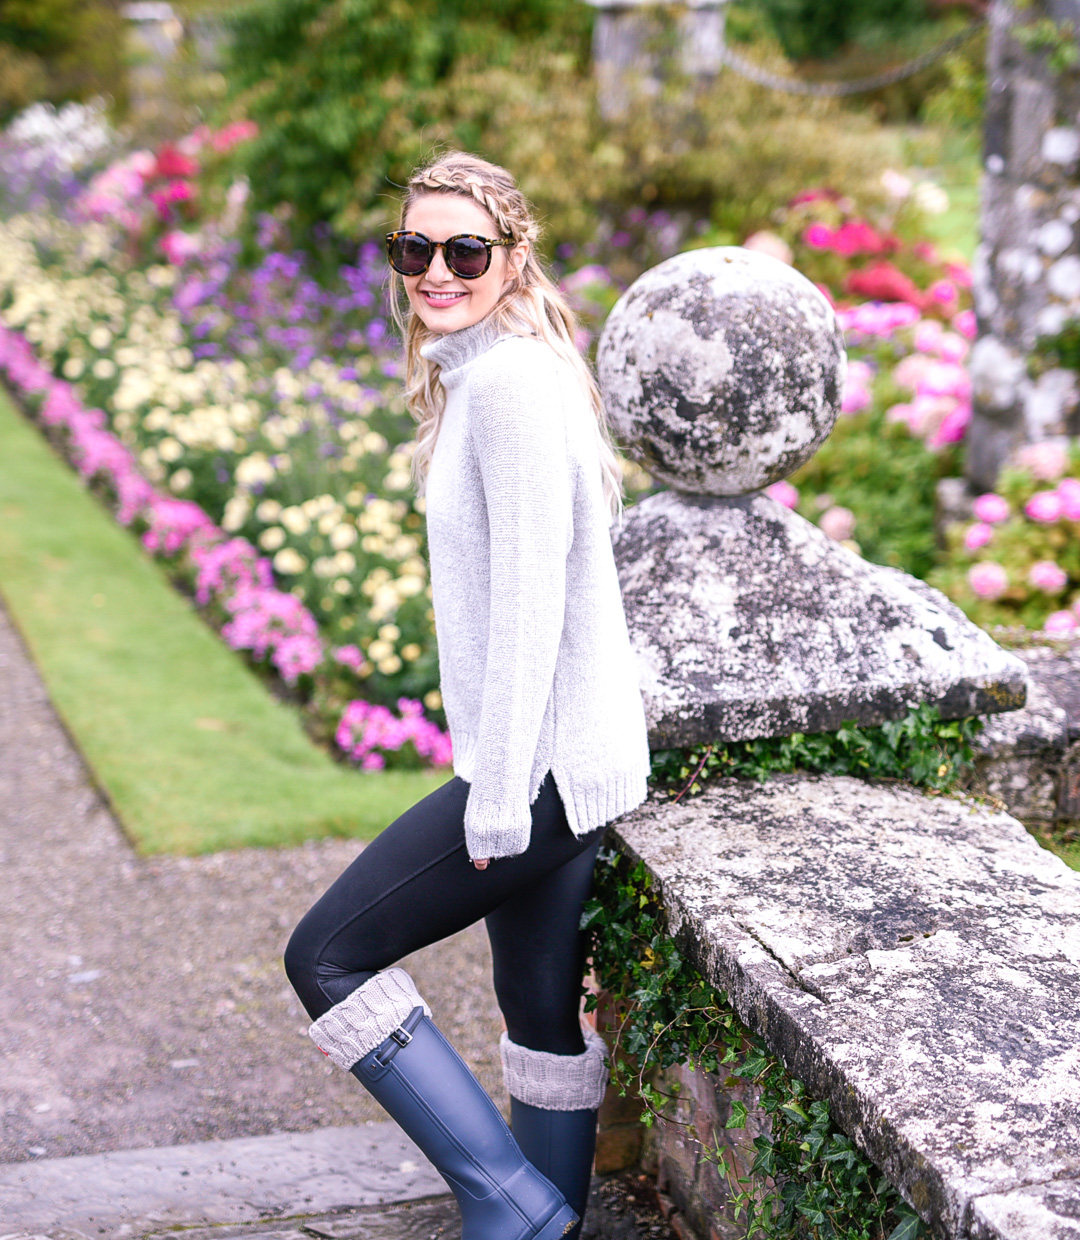 Jenna Colgrove exploring the secret garden at Dromoland Castle in Ireland. 